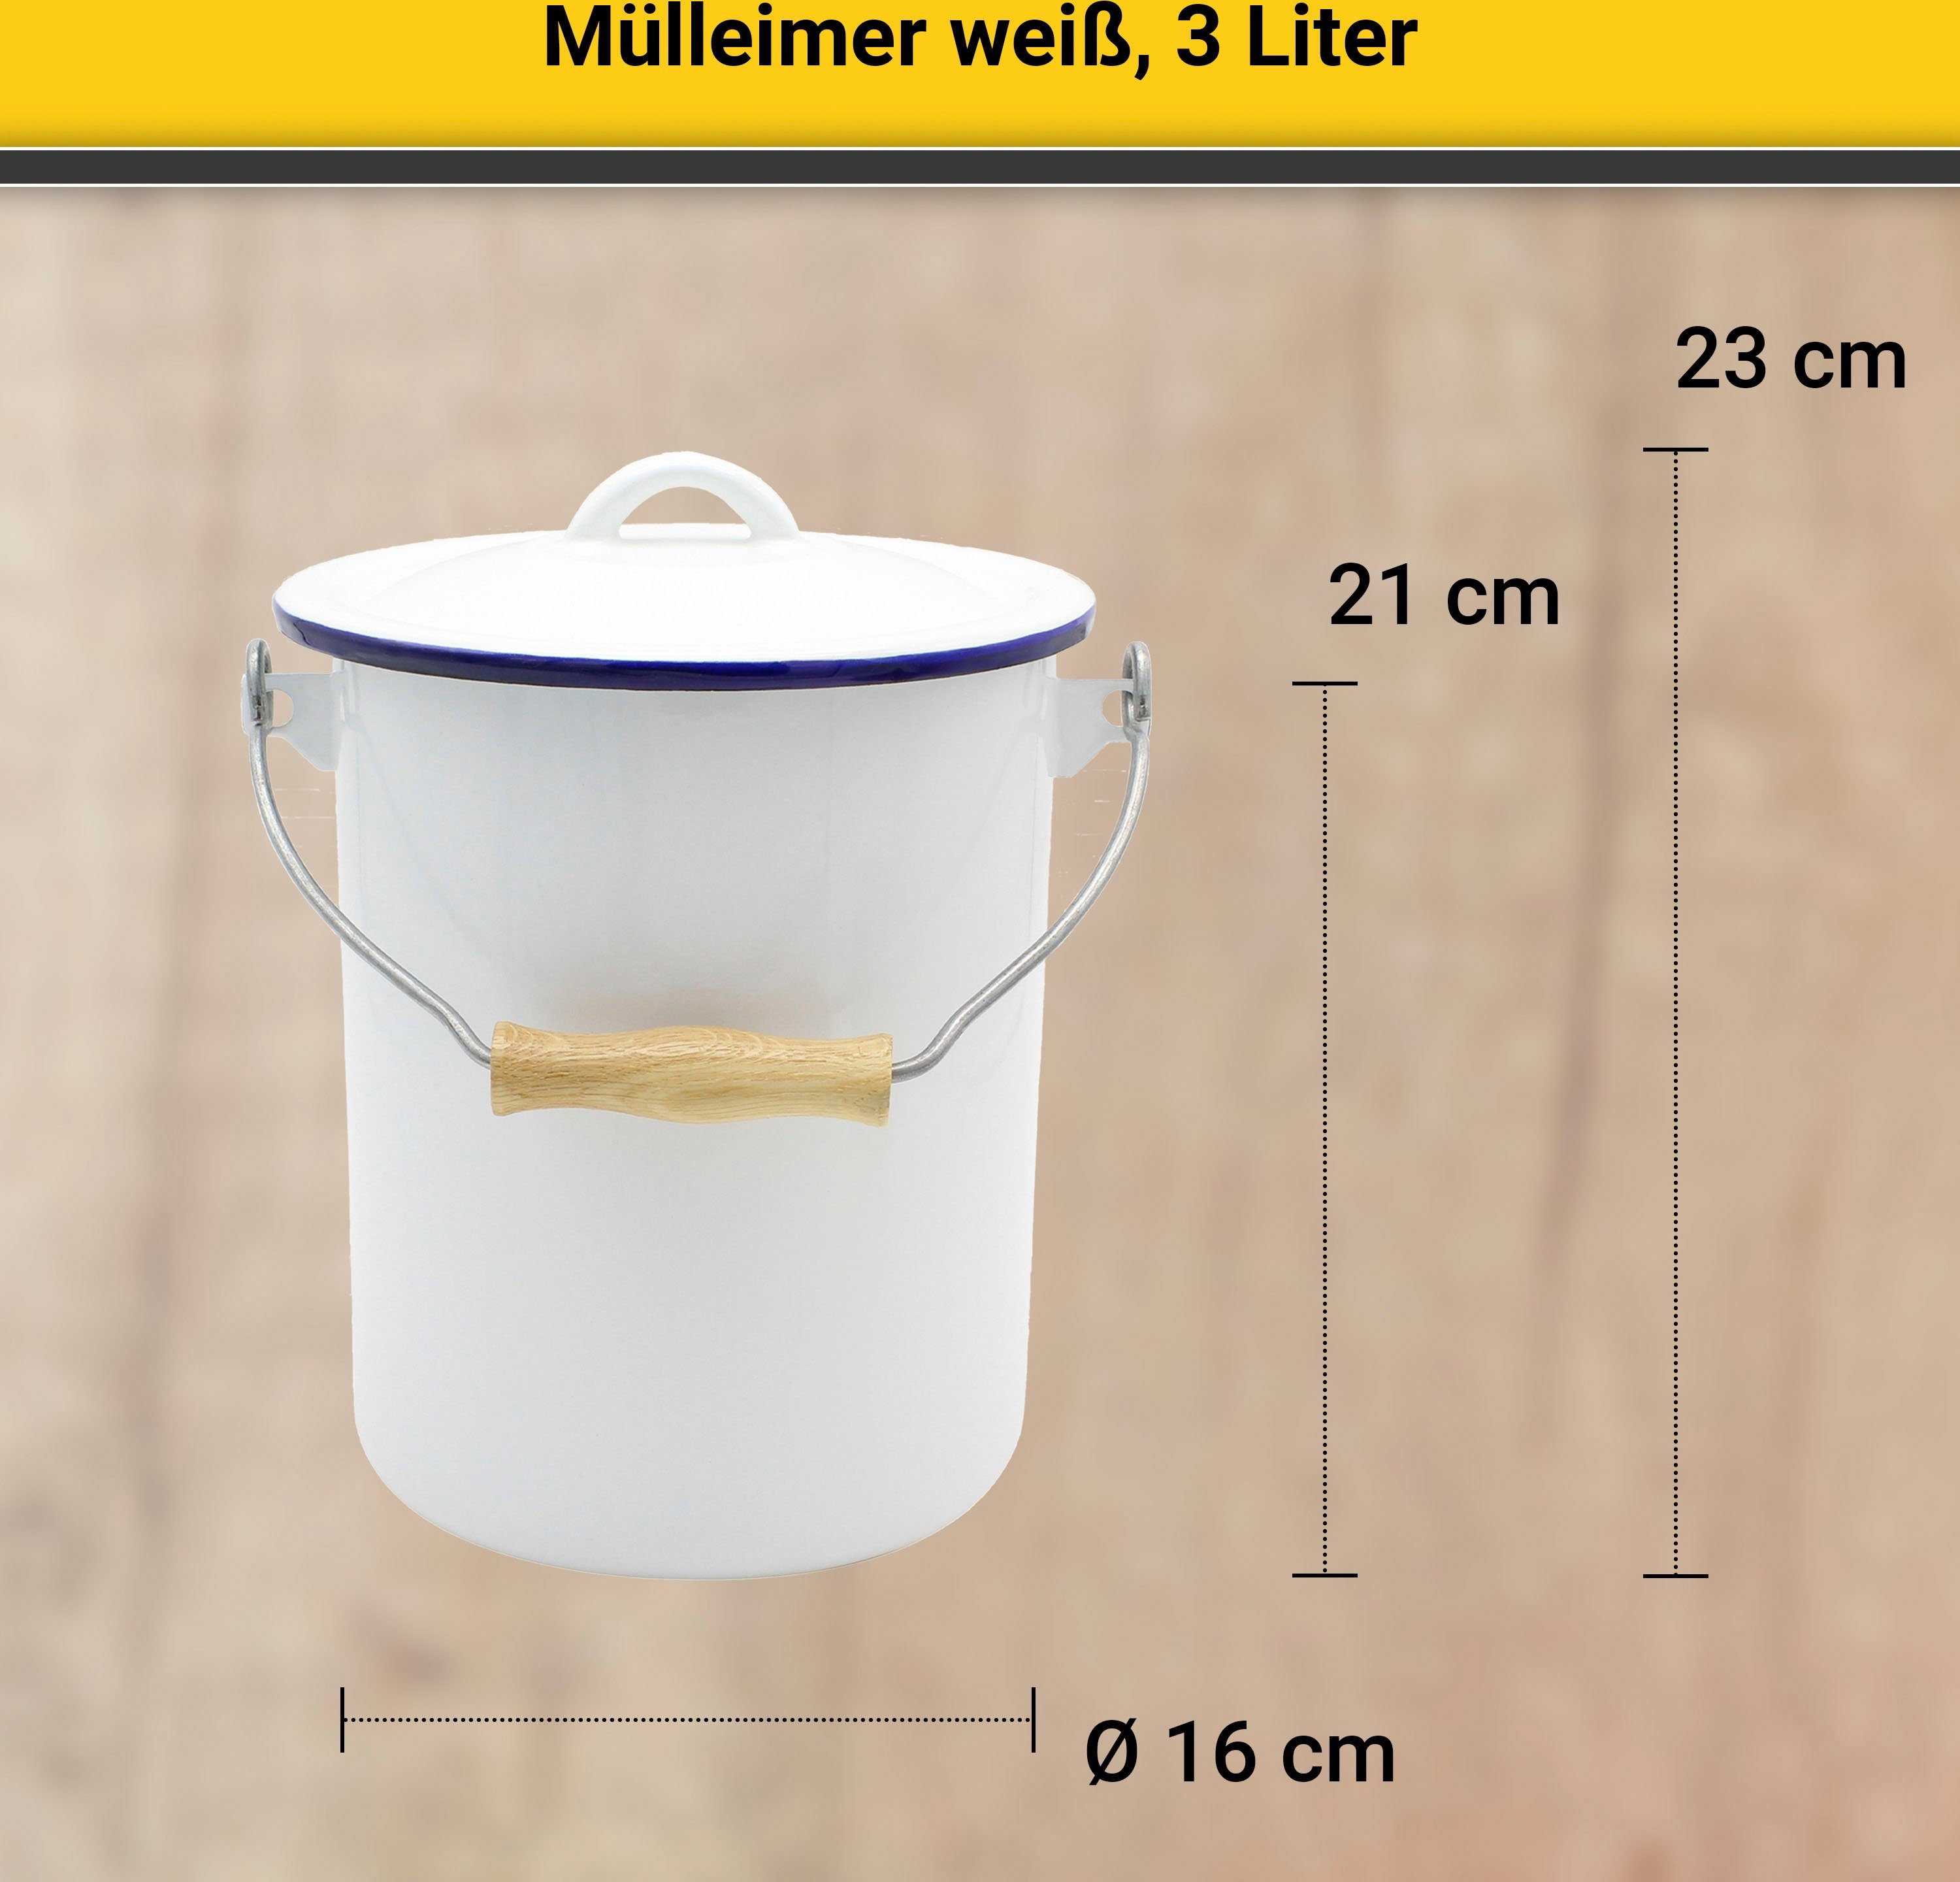 Europe Husum, Krüger Liter, Made in Emaille, Mülleimer 3